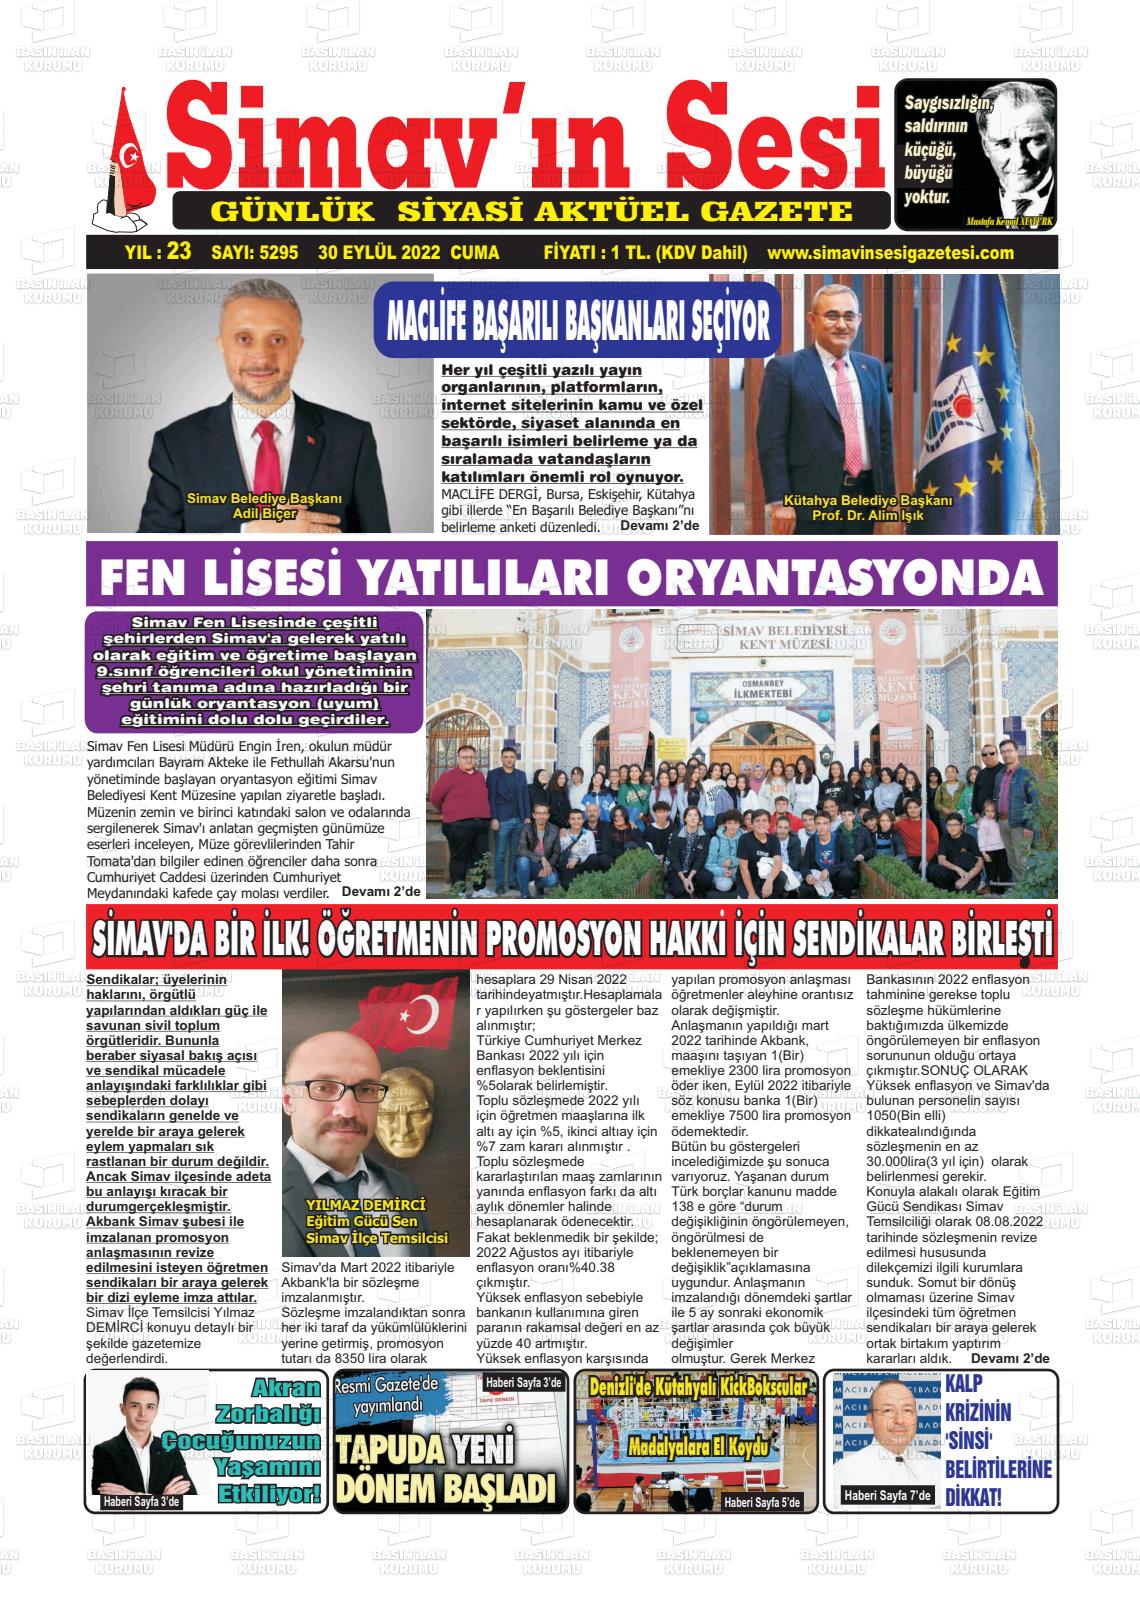 30 Eylül 2022 Simav'ın Sesi Gazete Manşeti